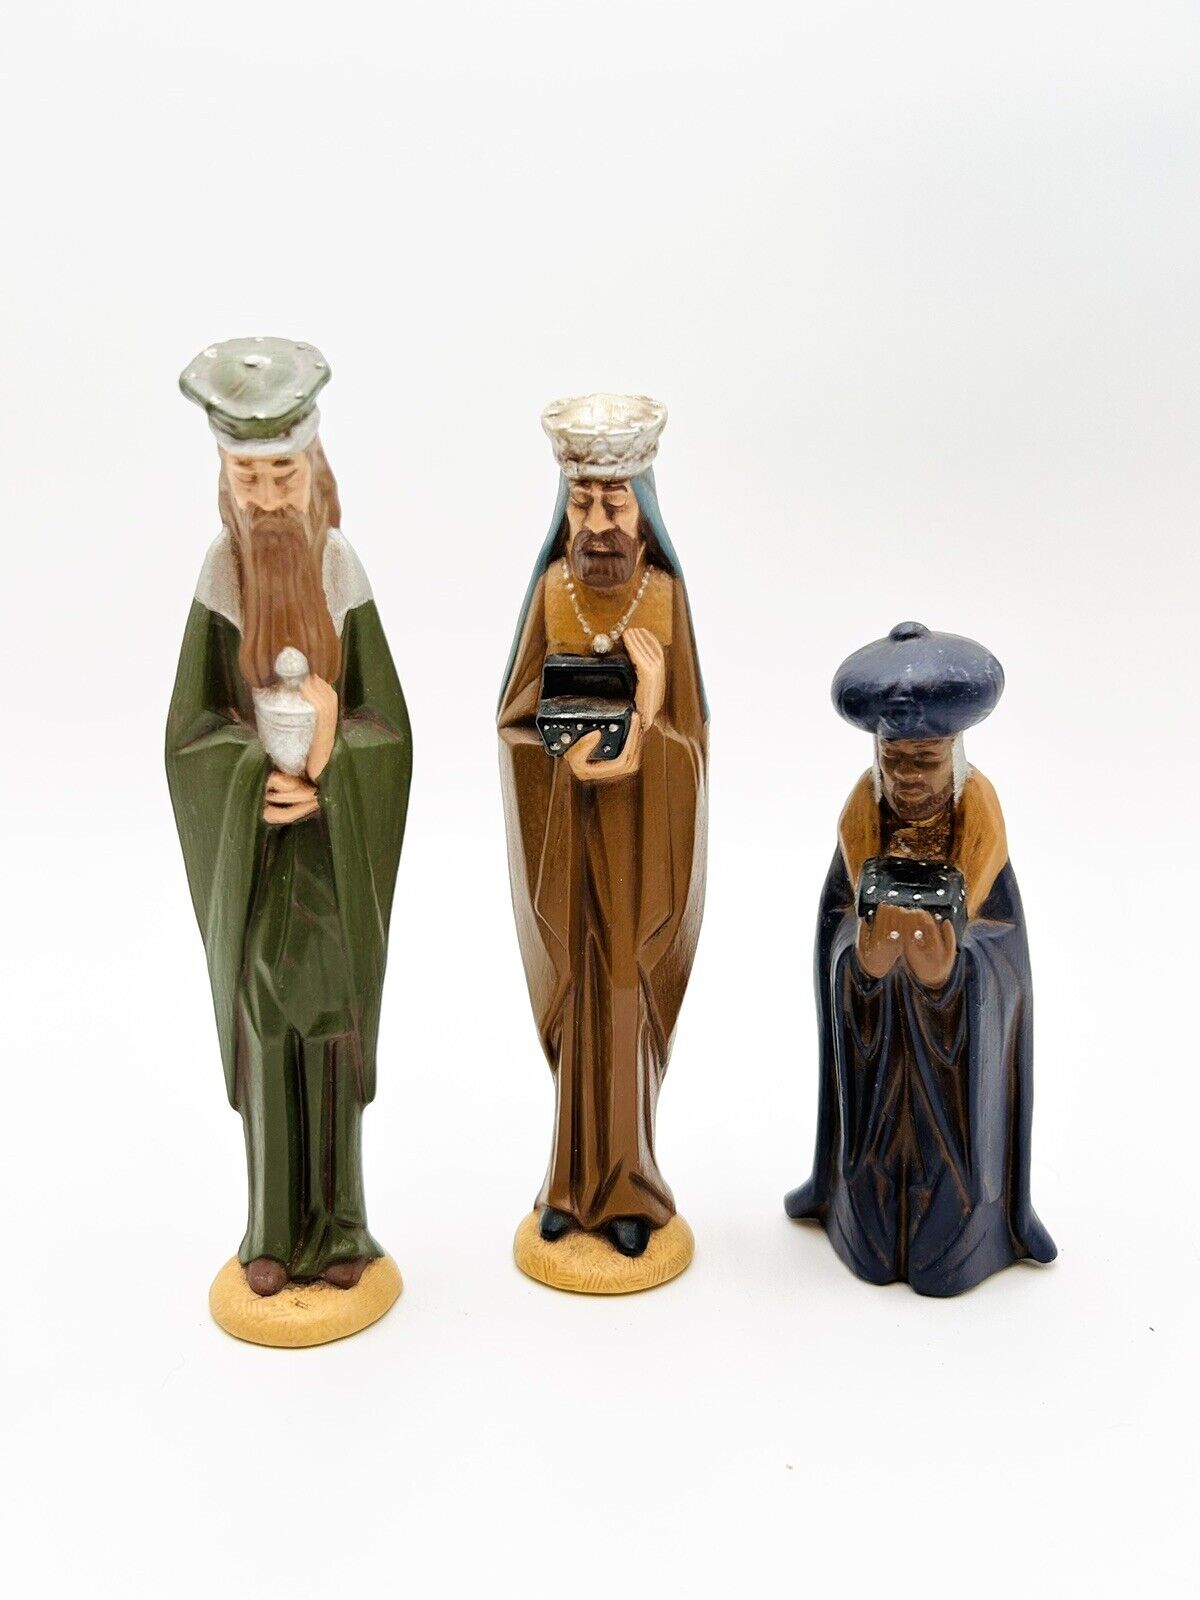 Vintage Wise Men Nativity Figurines 1980s Handpainted Signed NB Three Kings 6.5”